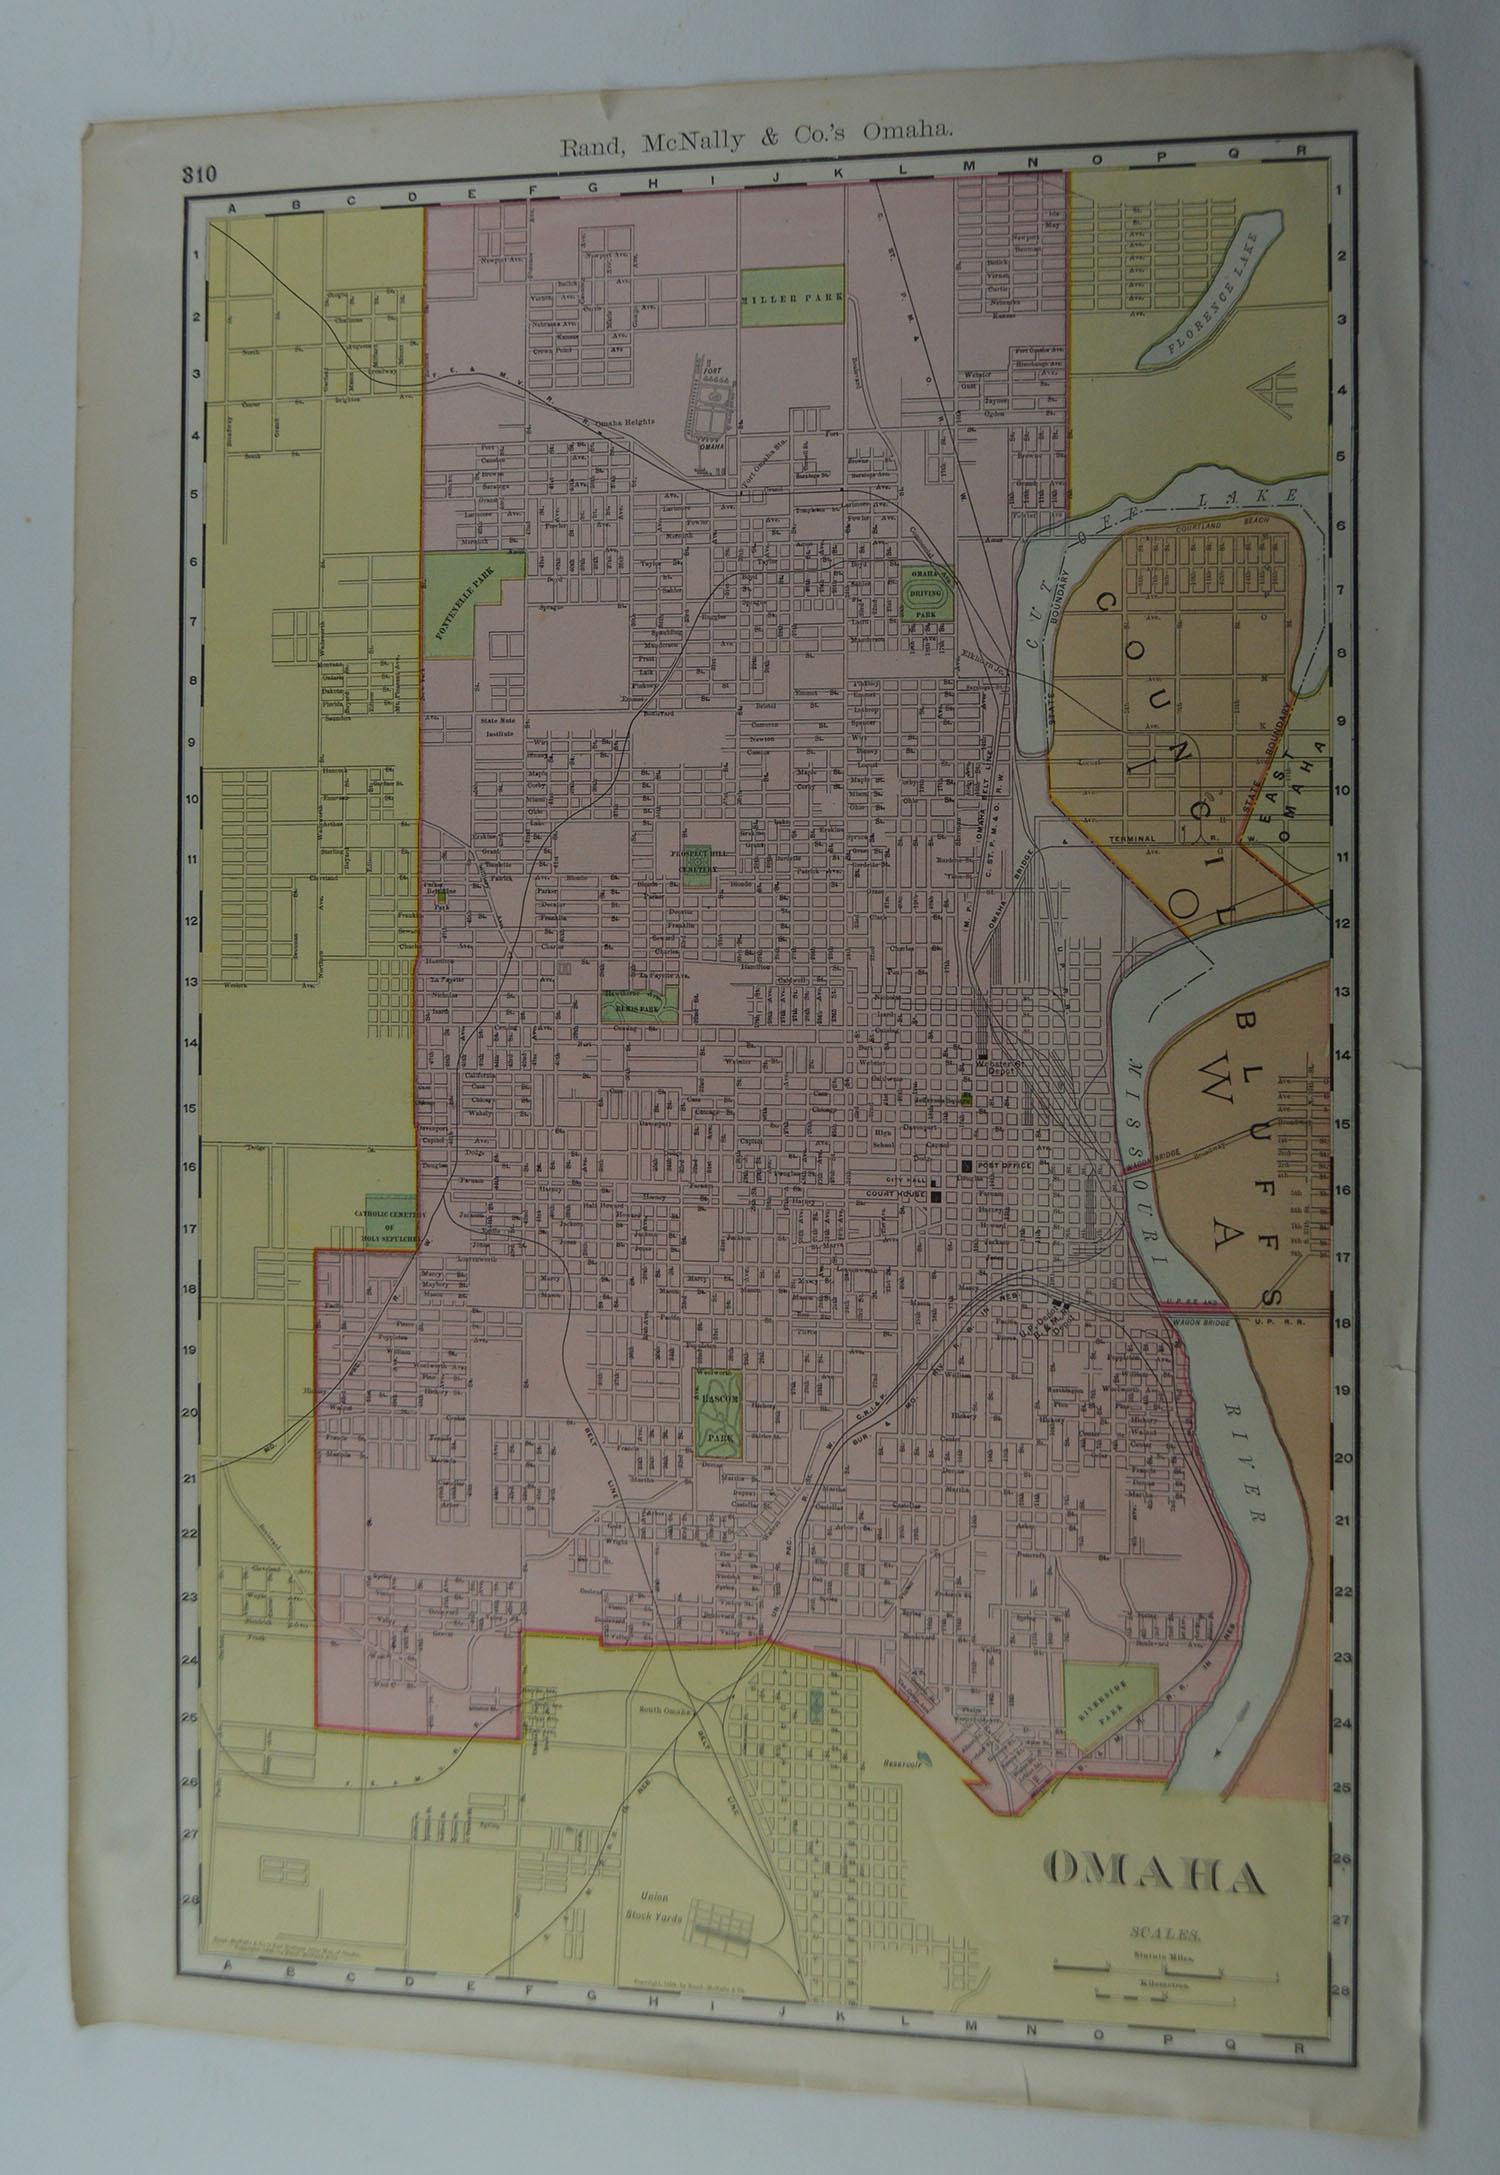 Other Original Antique City Plan of Omaha, Nebraska, USA, circa 1900